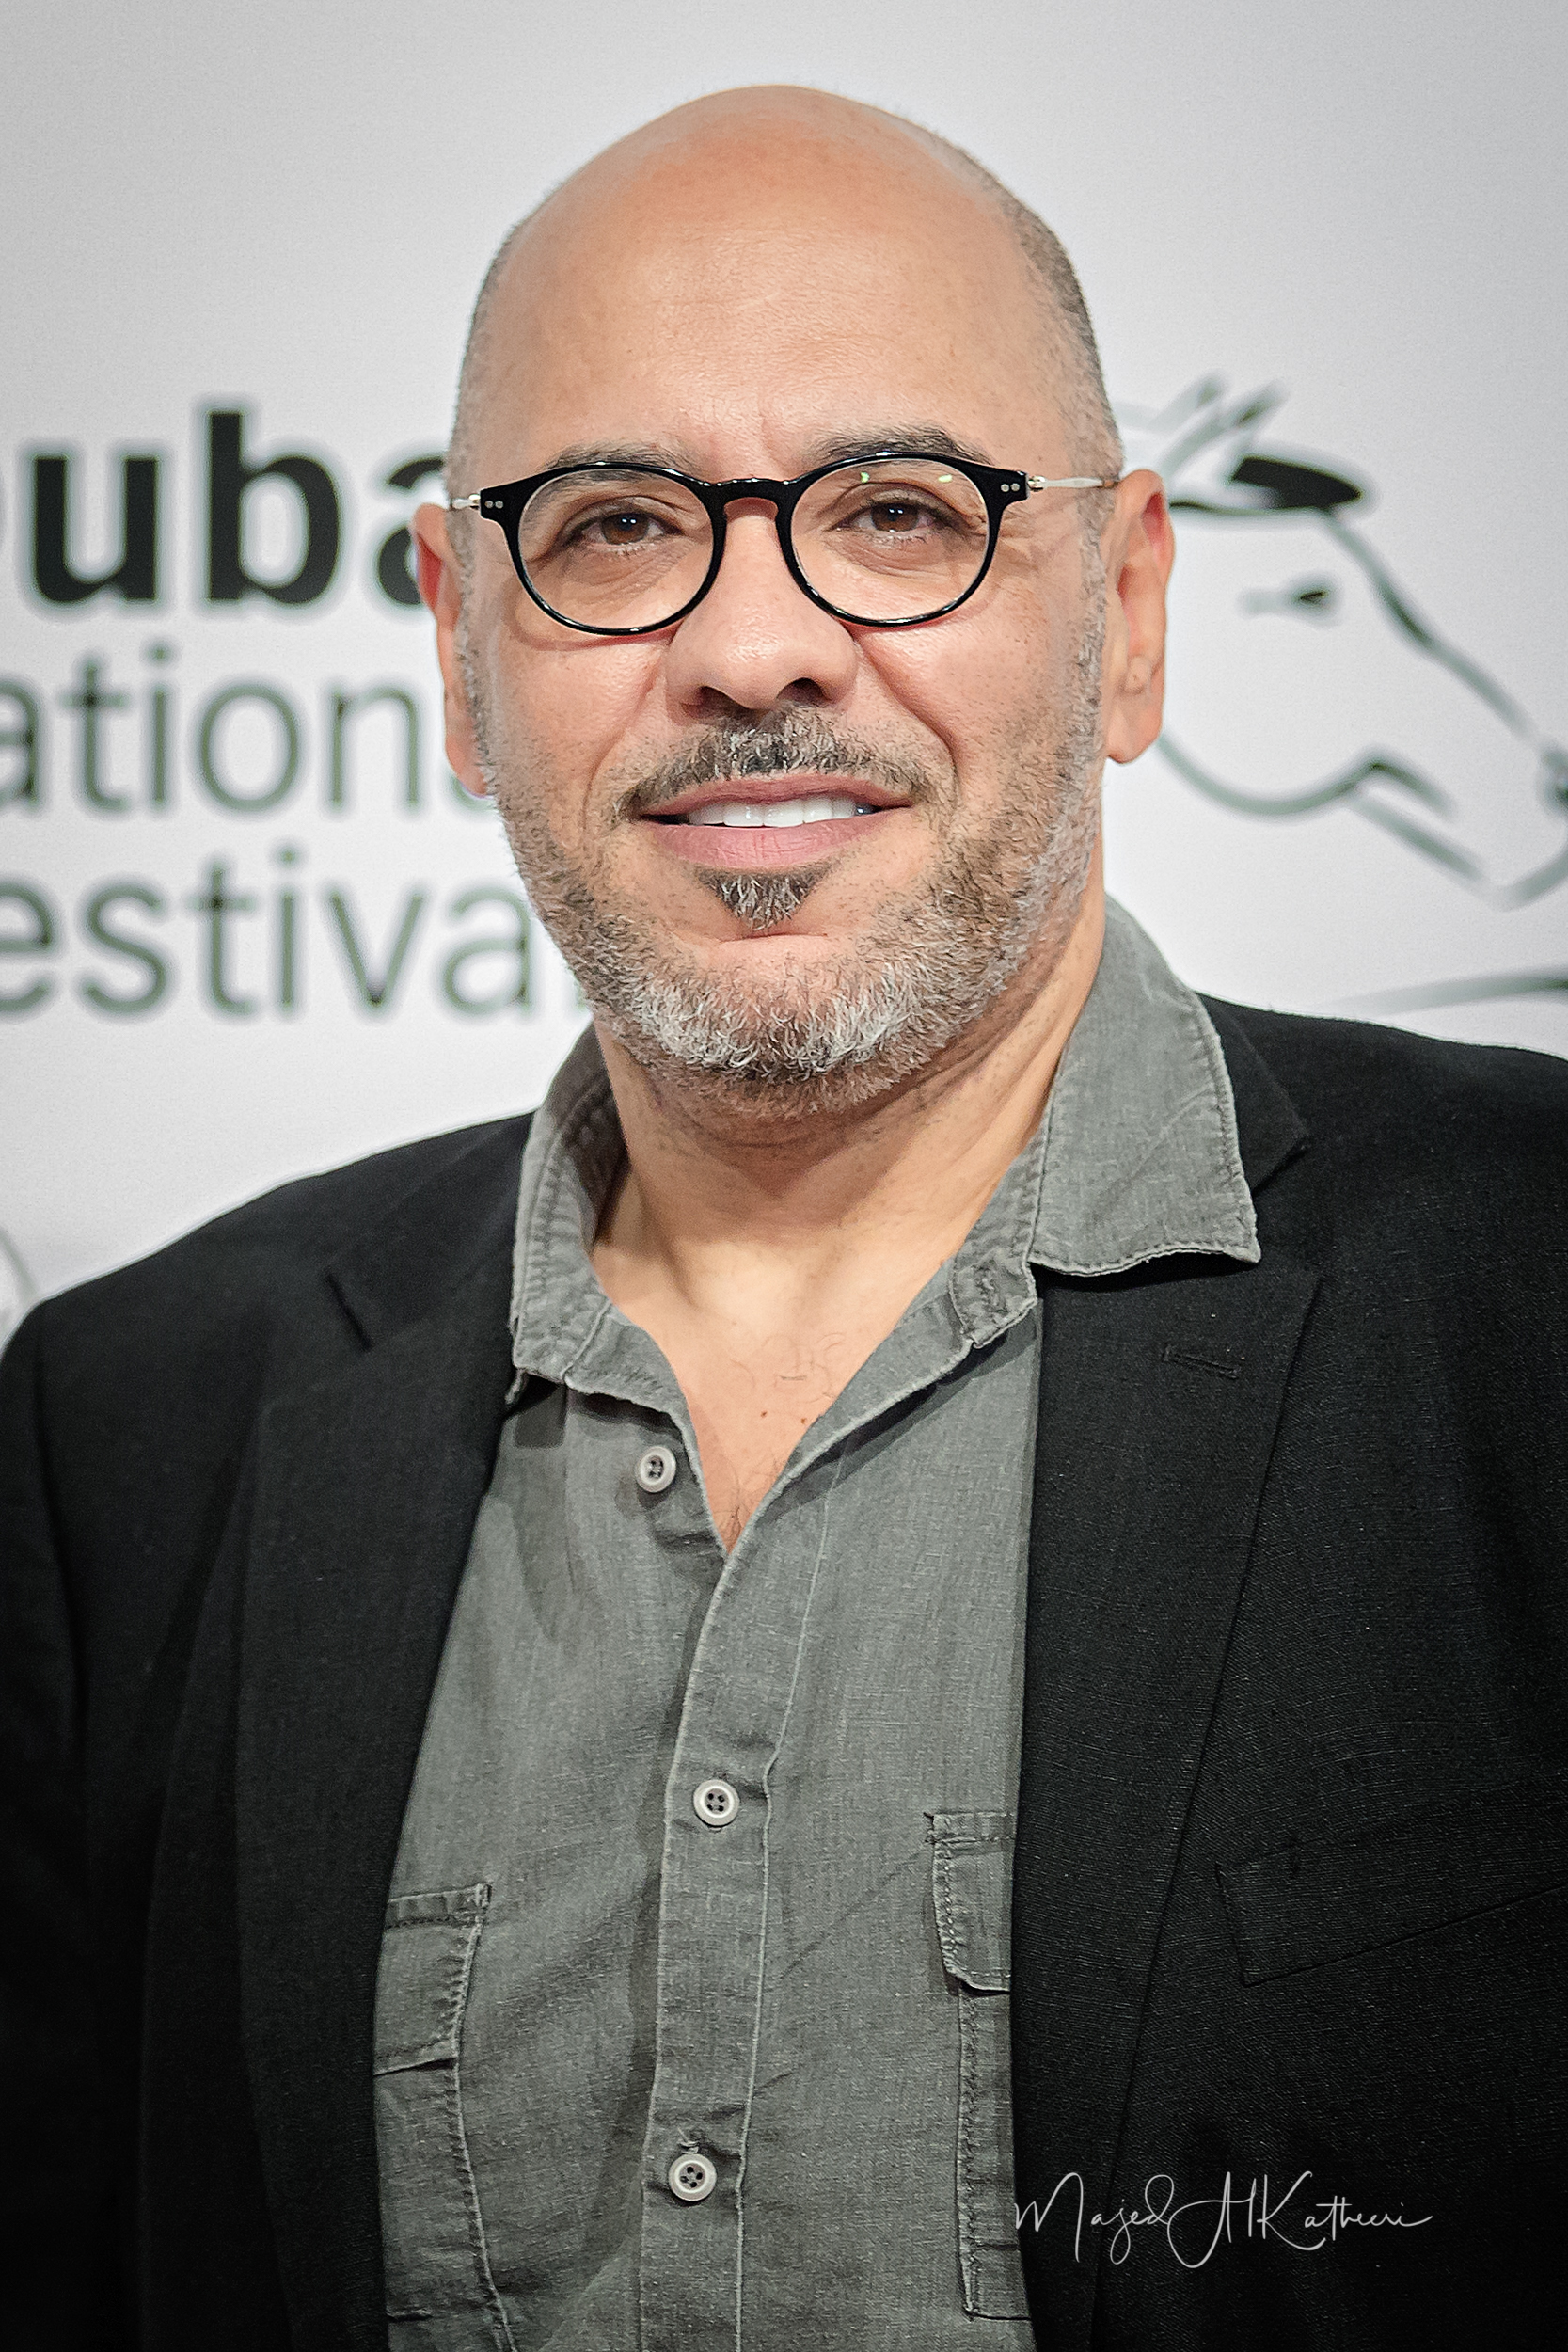  Majed AlKatheeri 